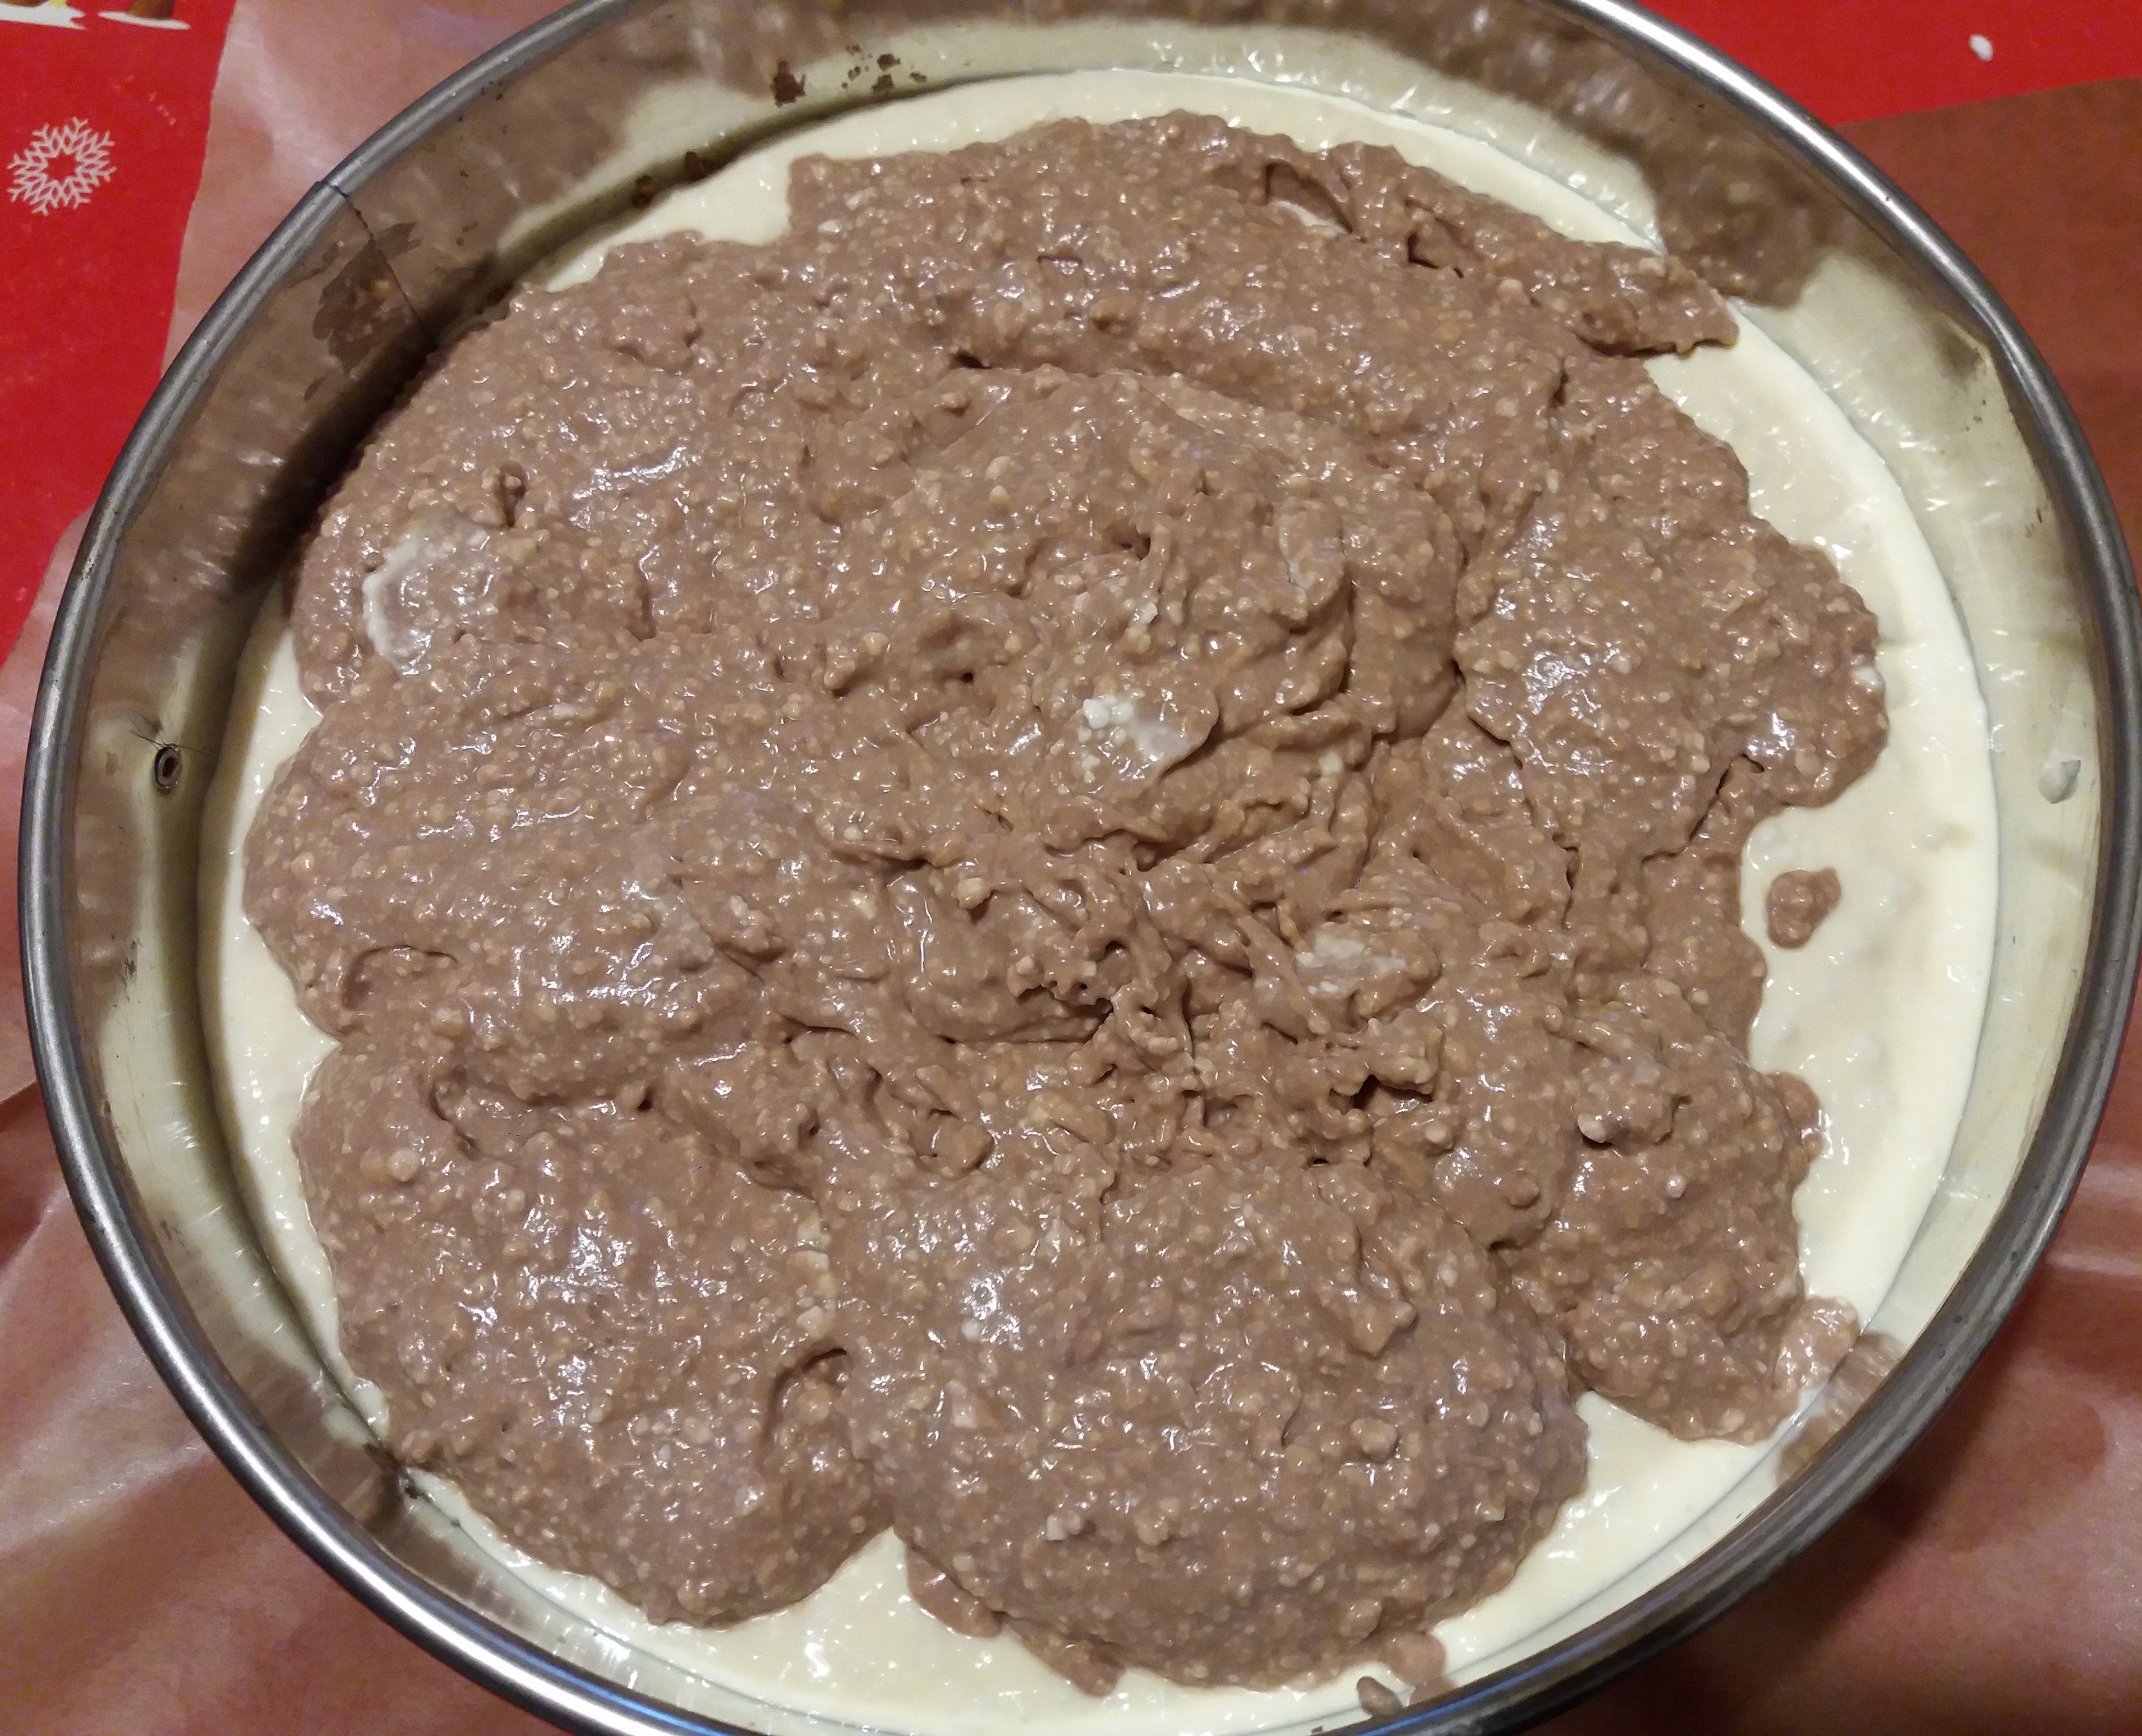 Desert cheesecake cu ciocolata